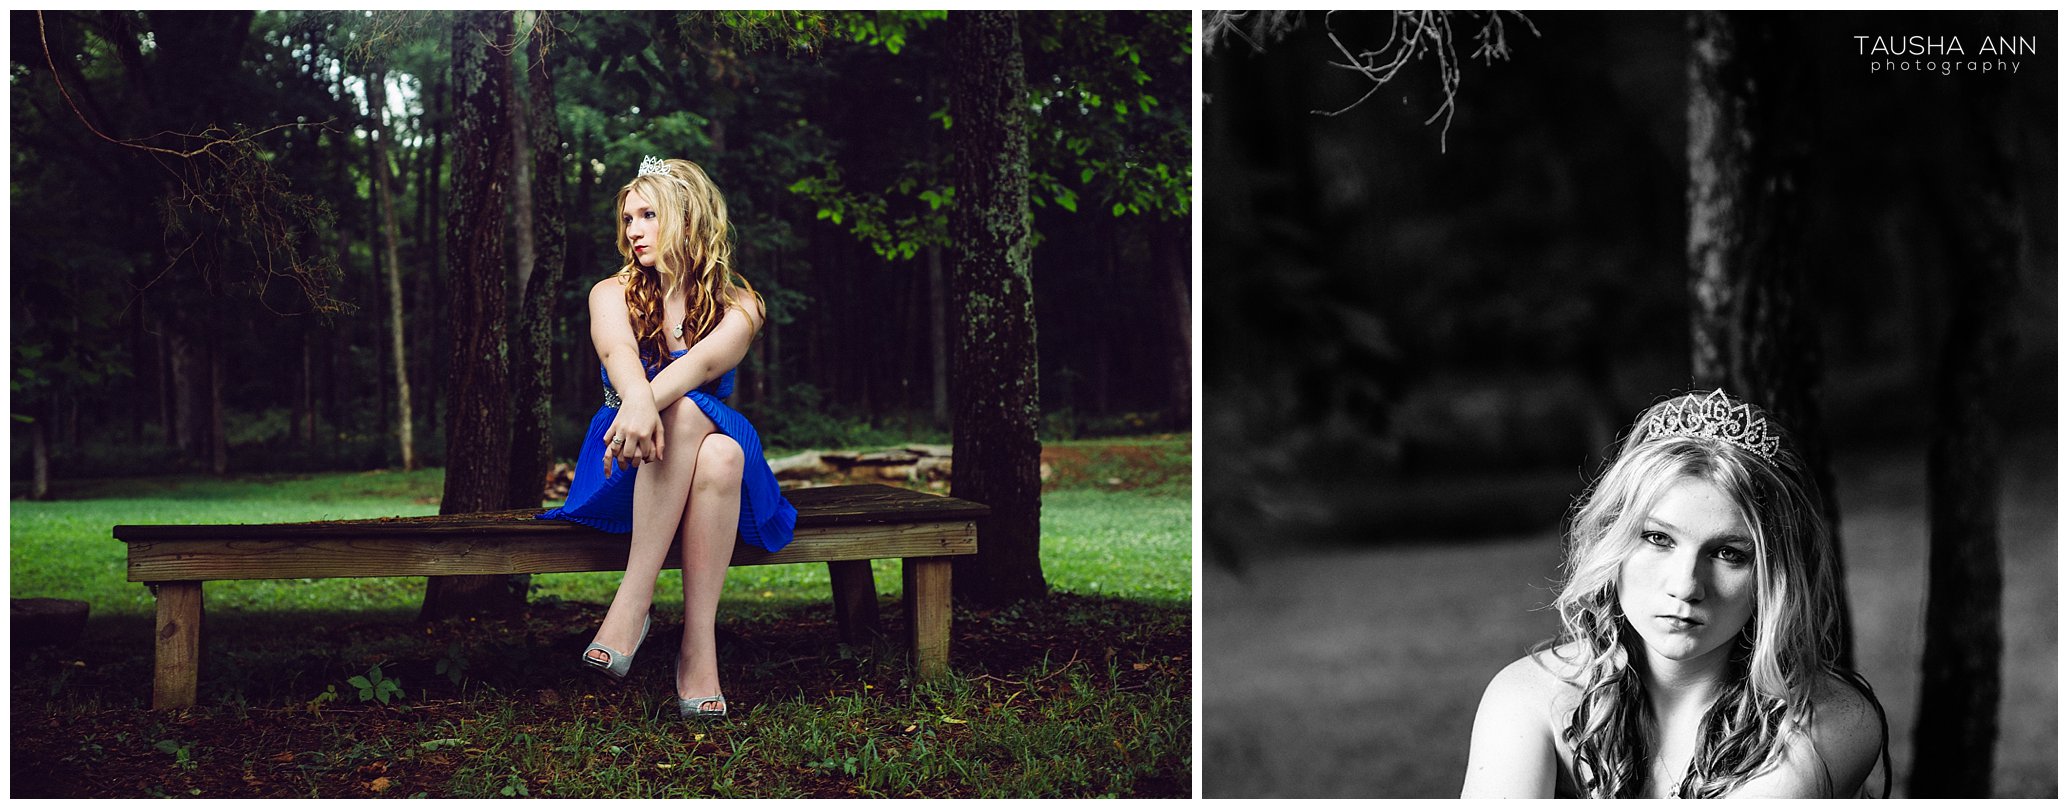 Sammie's_Sweet_16_Duck_Pond_Farm_Mt_Juliet_Tausha_Ann_Photography_Model_Nashville_Franklin_Spinning_Blue_Dress_Tiara_Sitting_On_Bench_Tree_Gorgeous